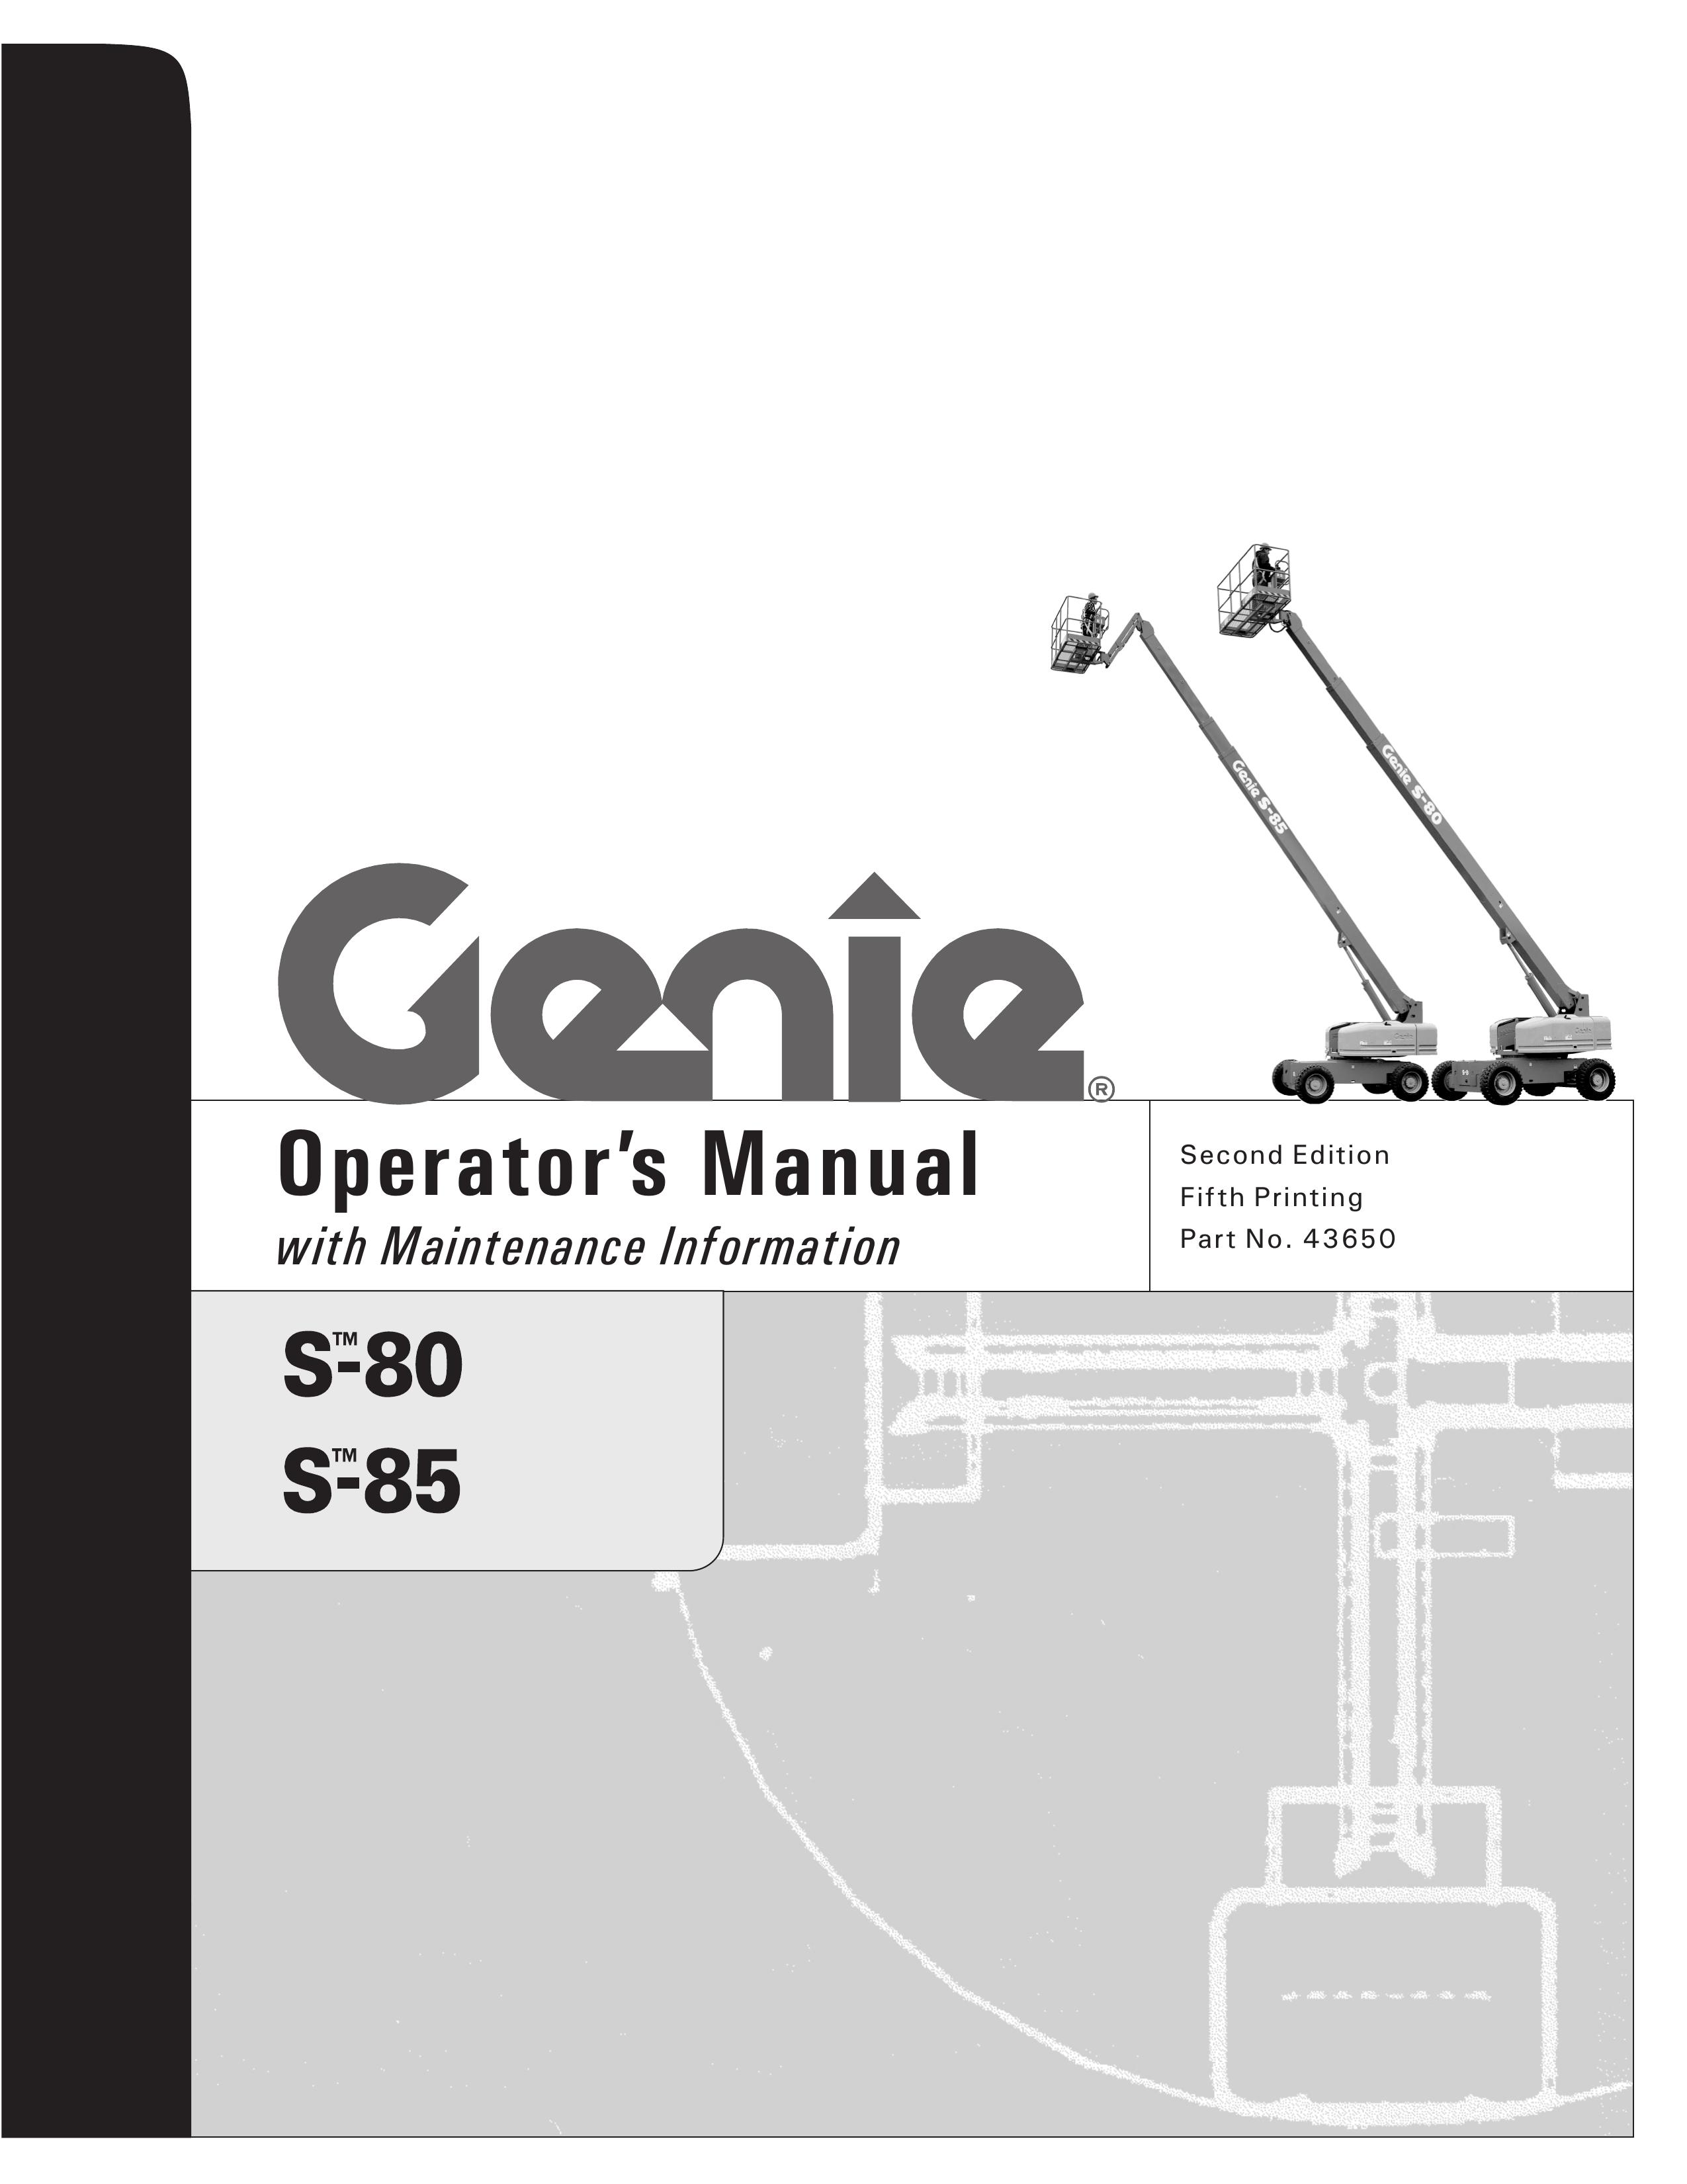 Genie S-85 Utility Vehicle User Manual